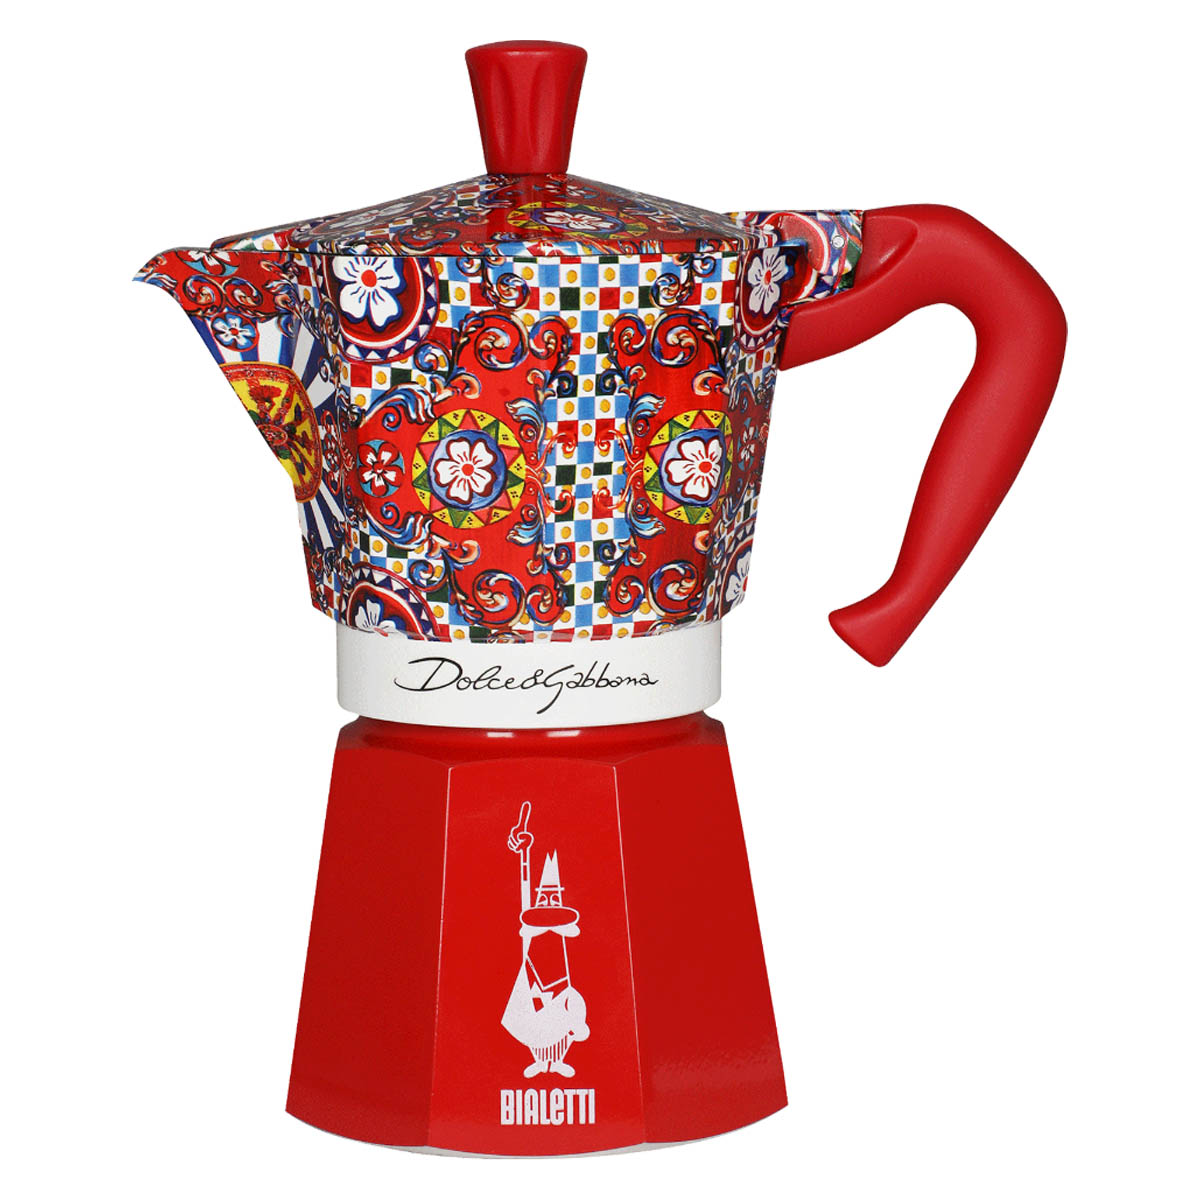 Гейзерная кофеварка Bialetti Dolce&Gabbana на 6 порций Bialetti 5221_6007, цвет красный